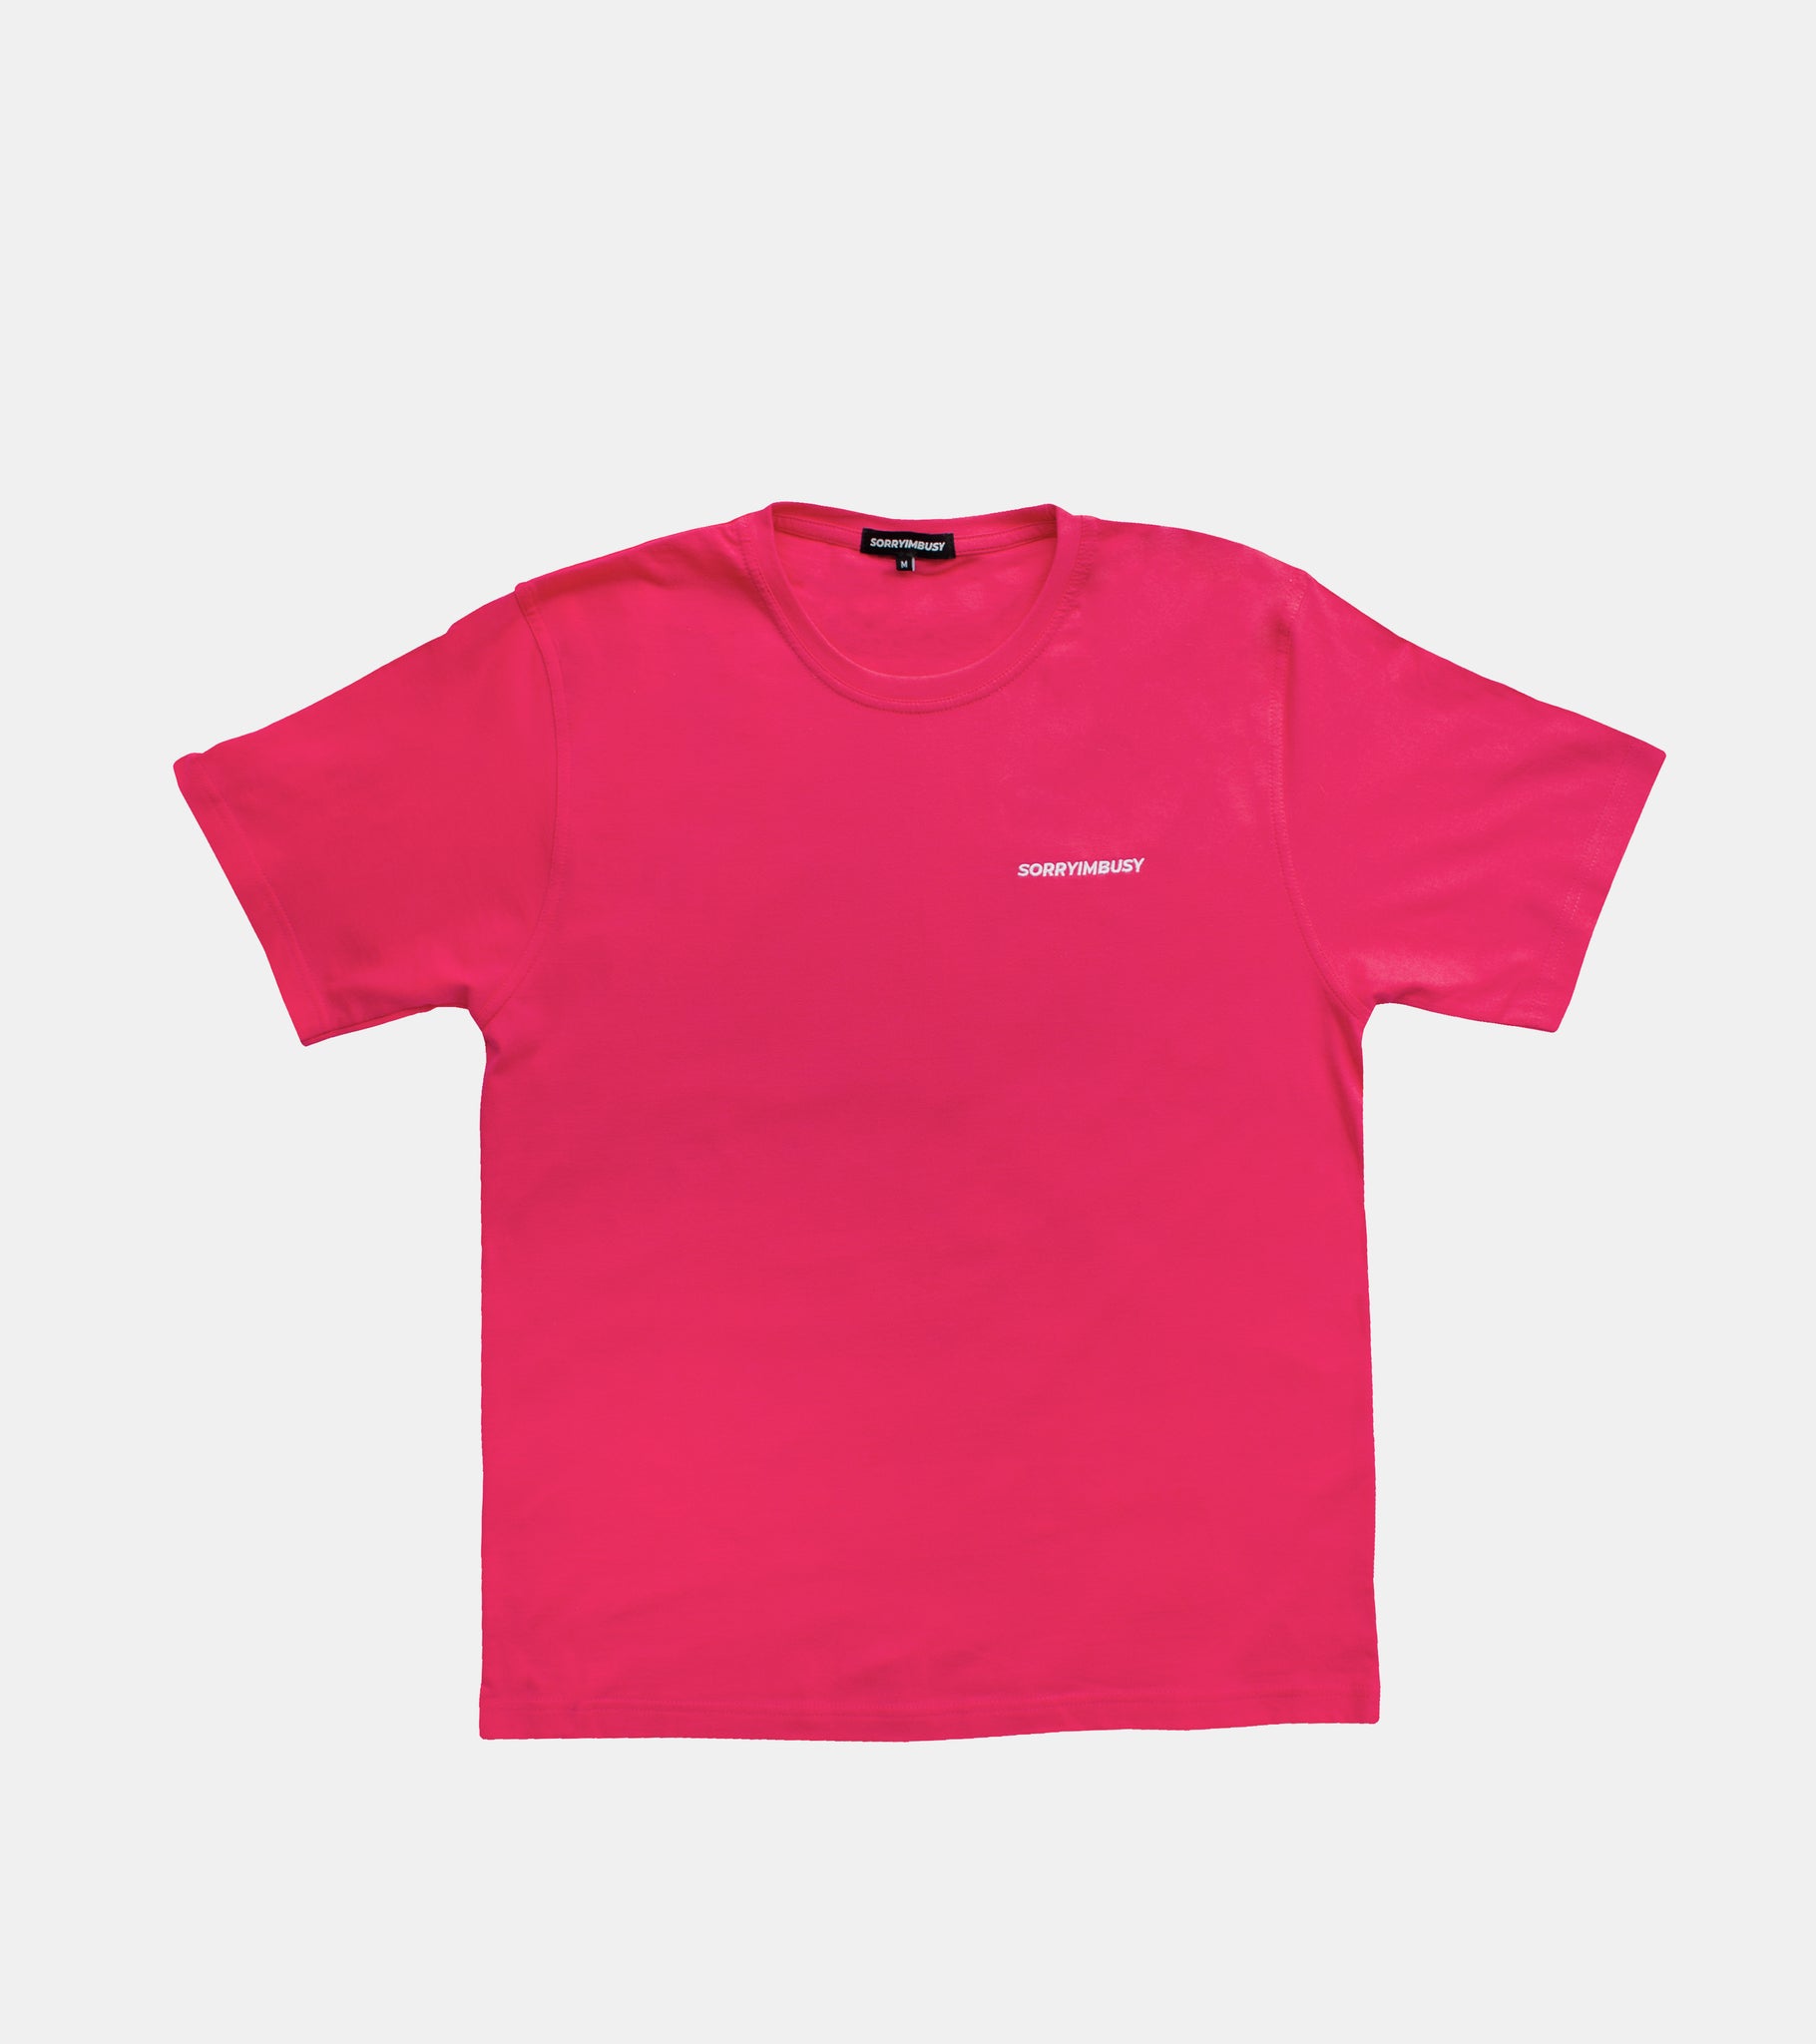 Classic Logo T-Shirt - Hot Pink - SORRYIMBUSY